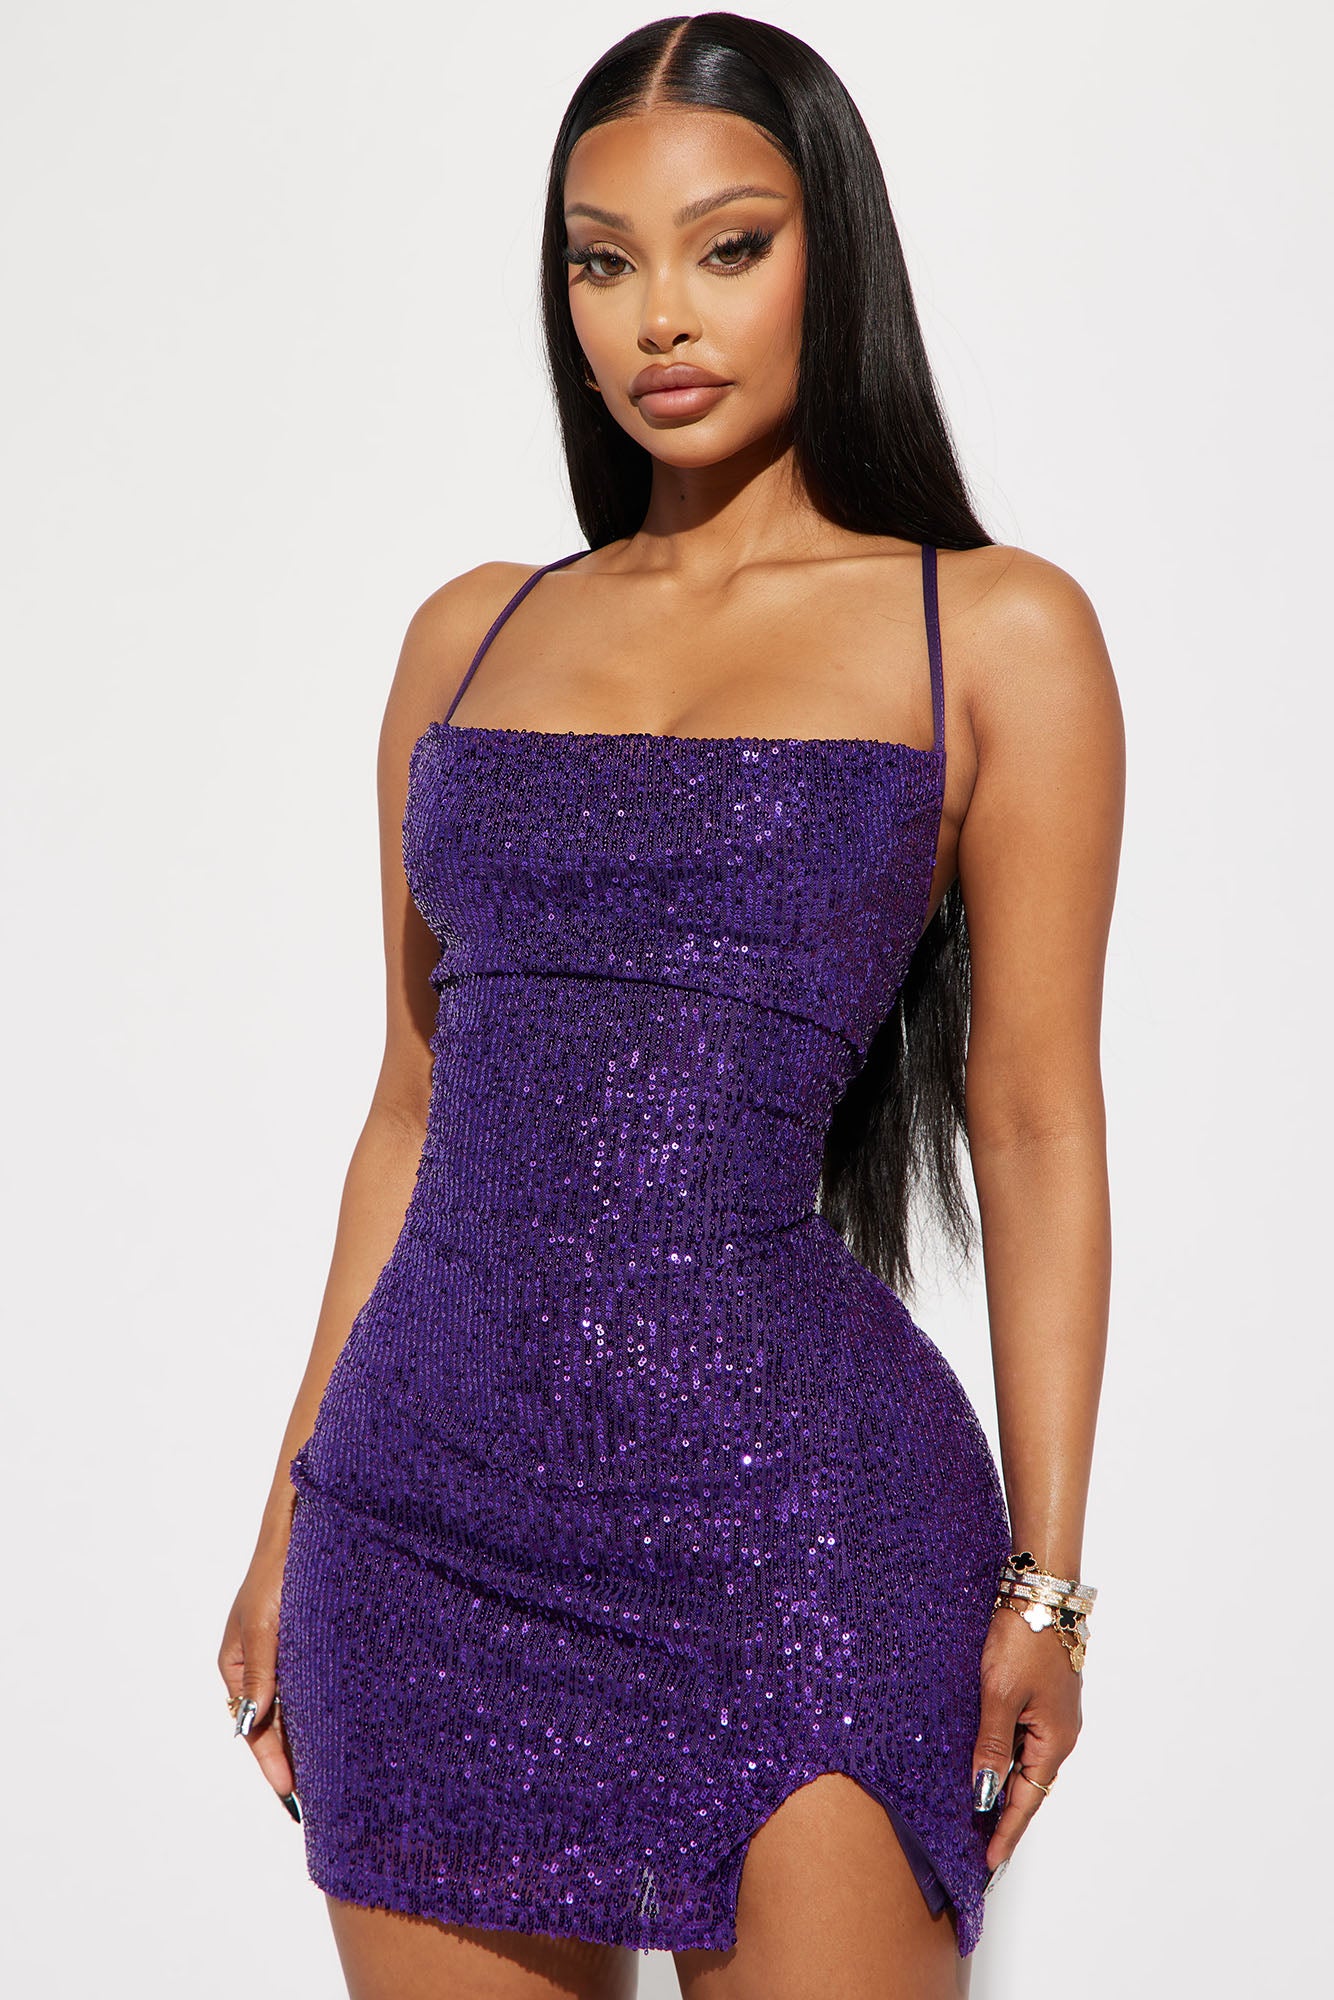 Womens Glow Up Sequin Mini Dress in Purple Size 3X by Fashion Nova